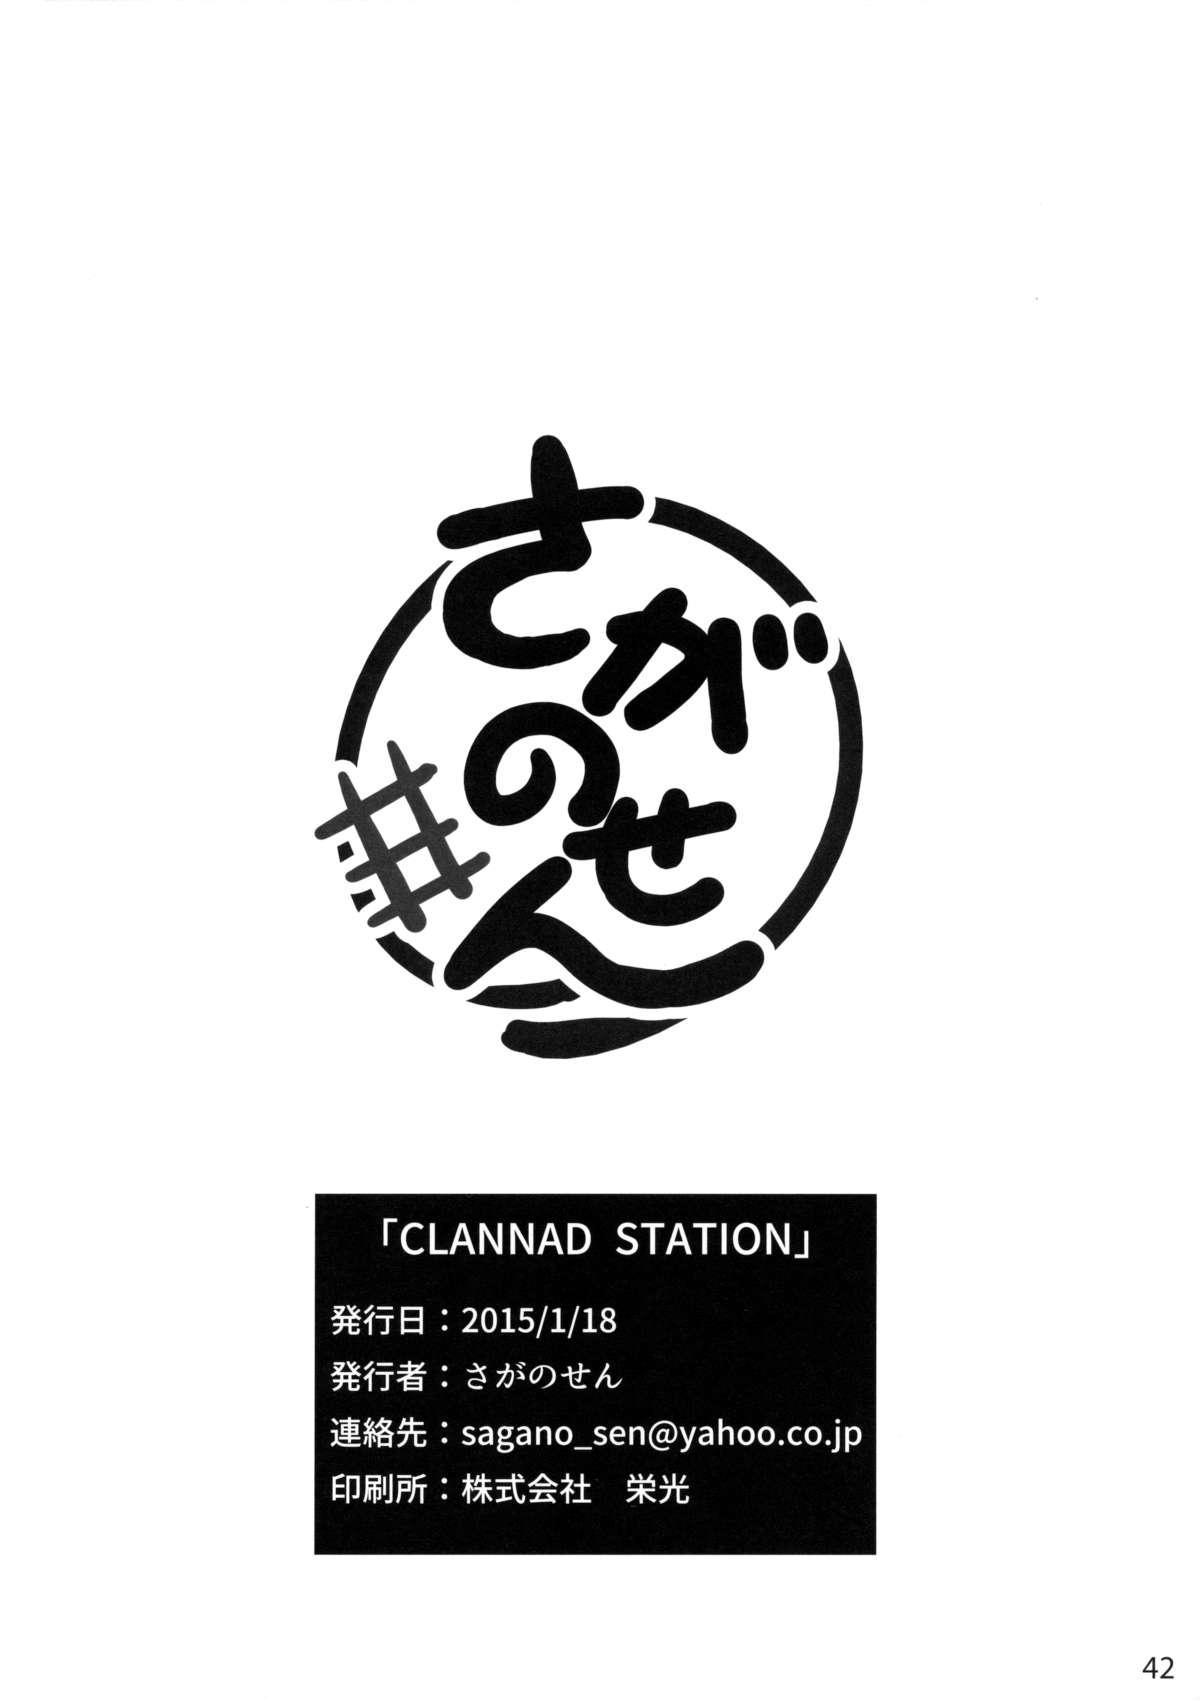 CLANNAD STATION 40